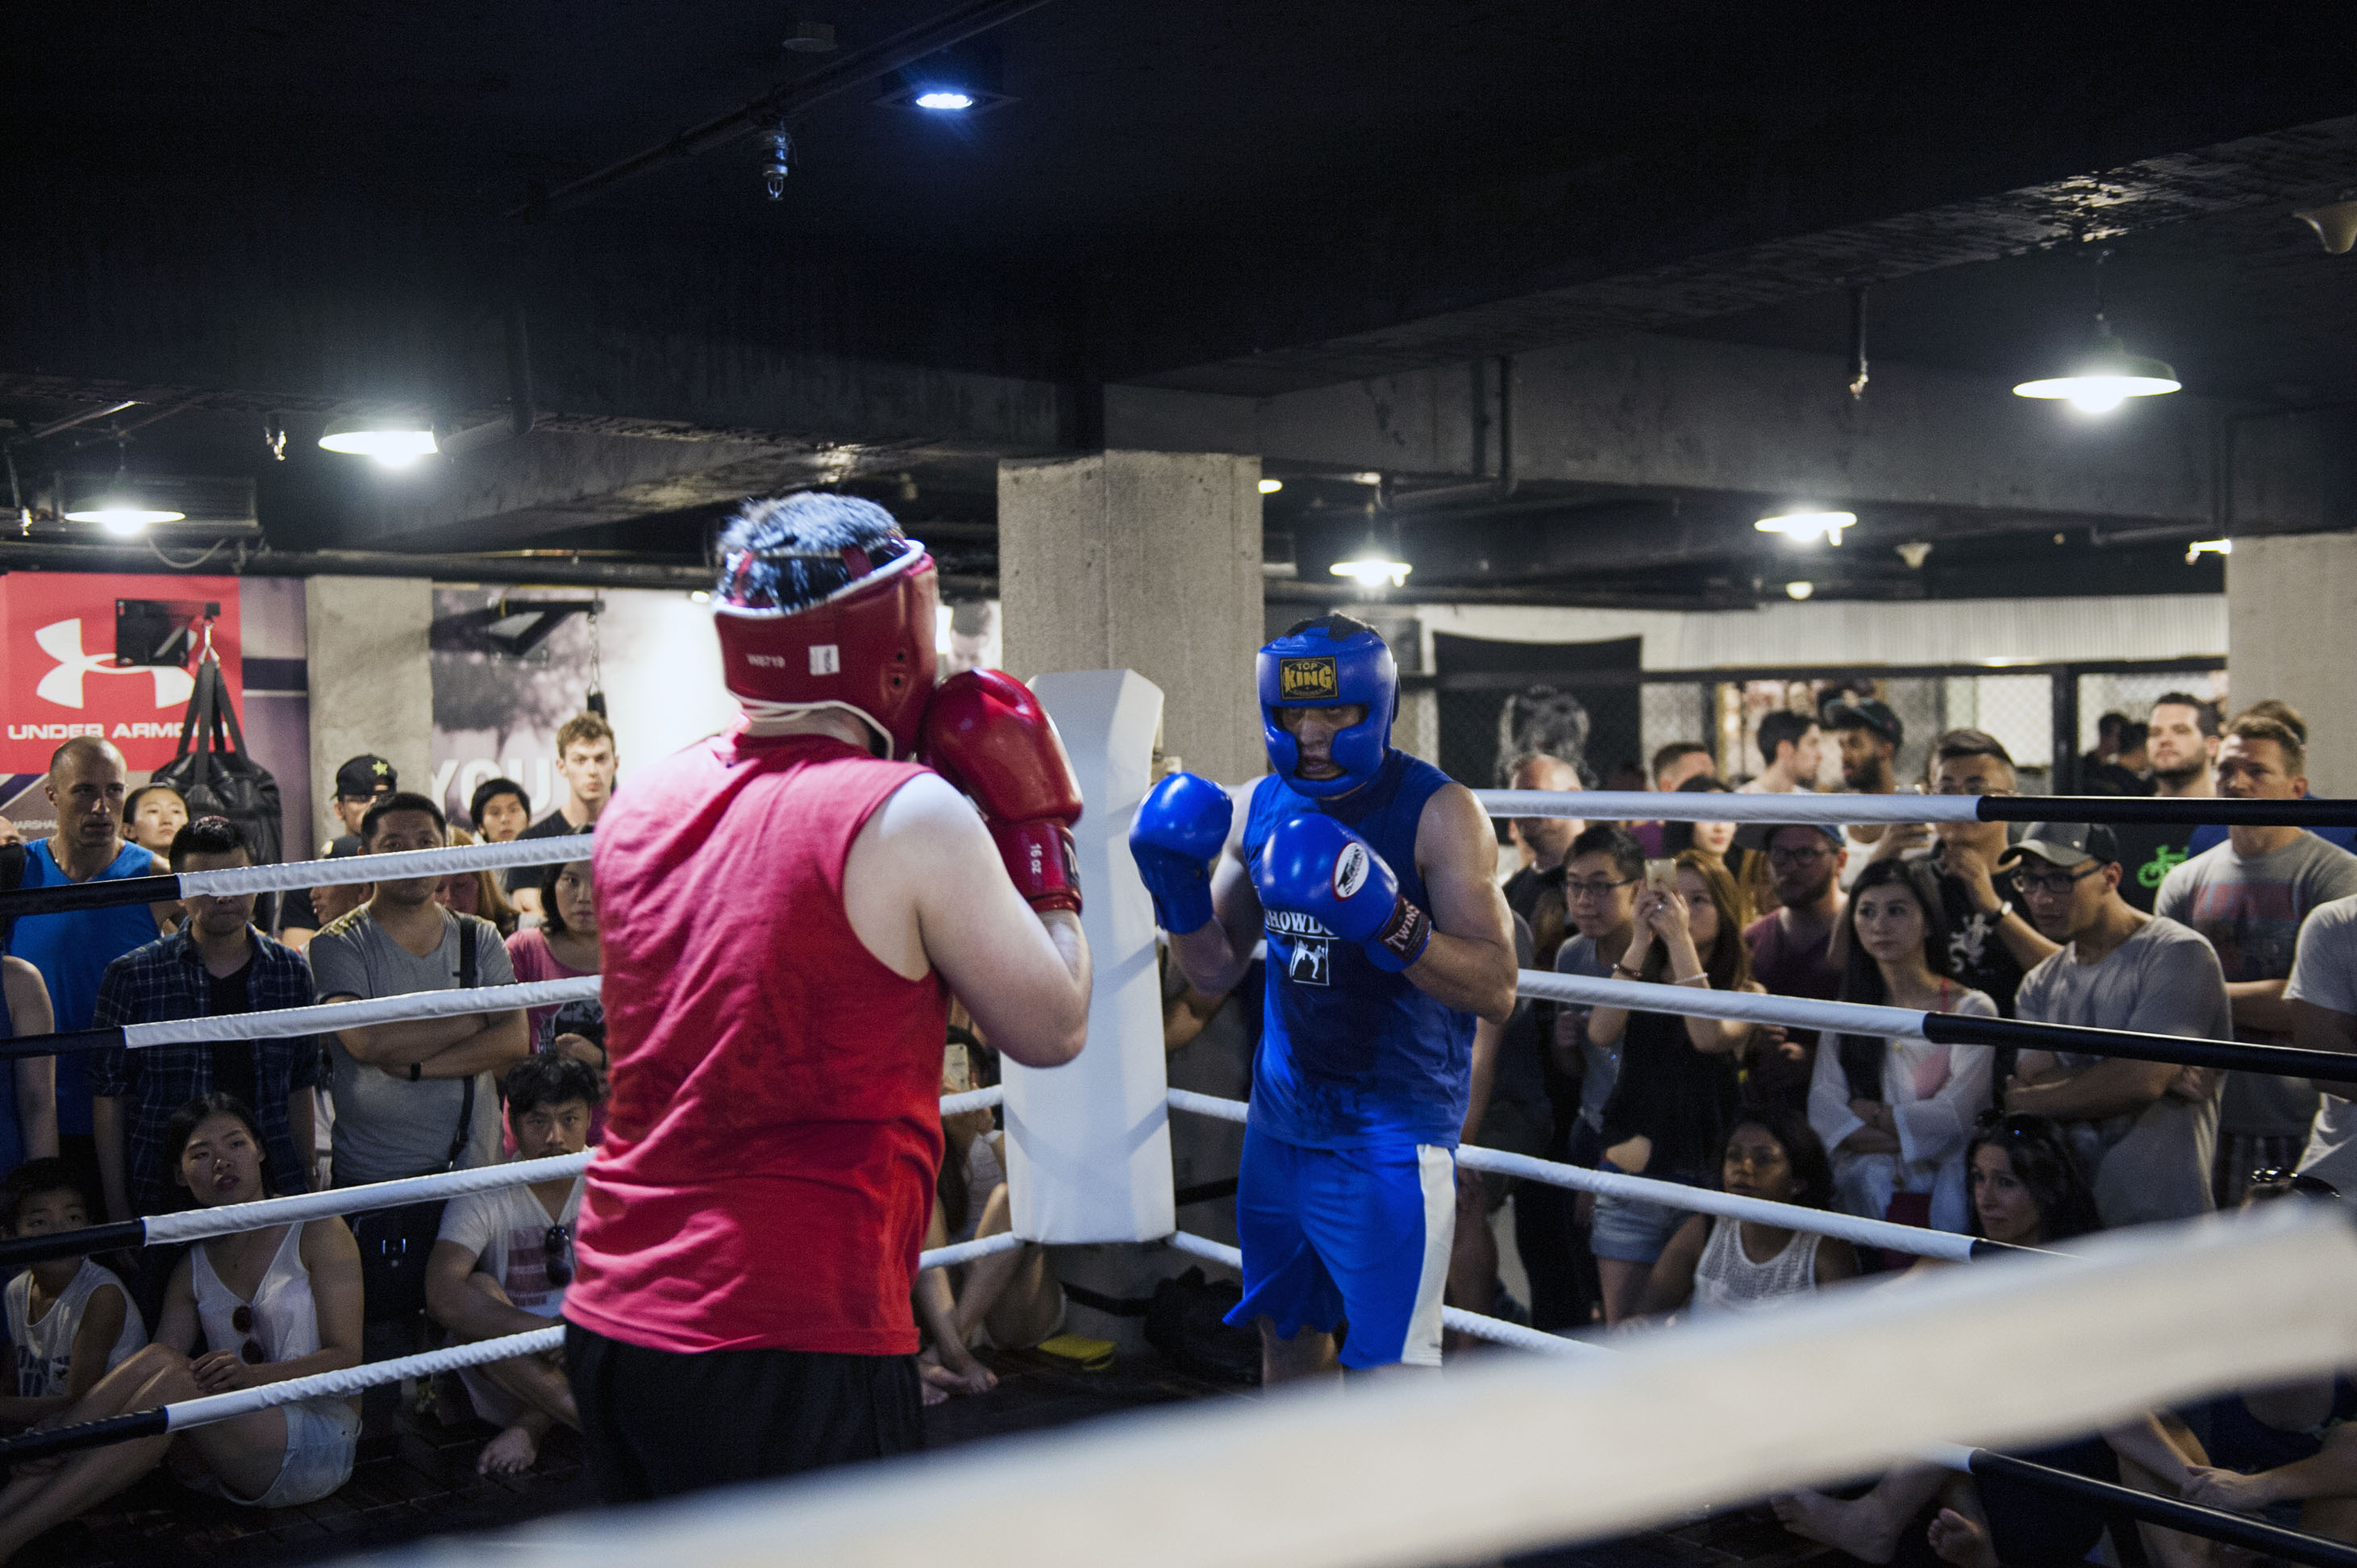 Shuangjing Showdown 3 Set for Saturday, December 5 at Tiger King MMA Gym